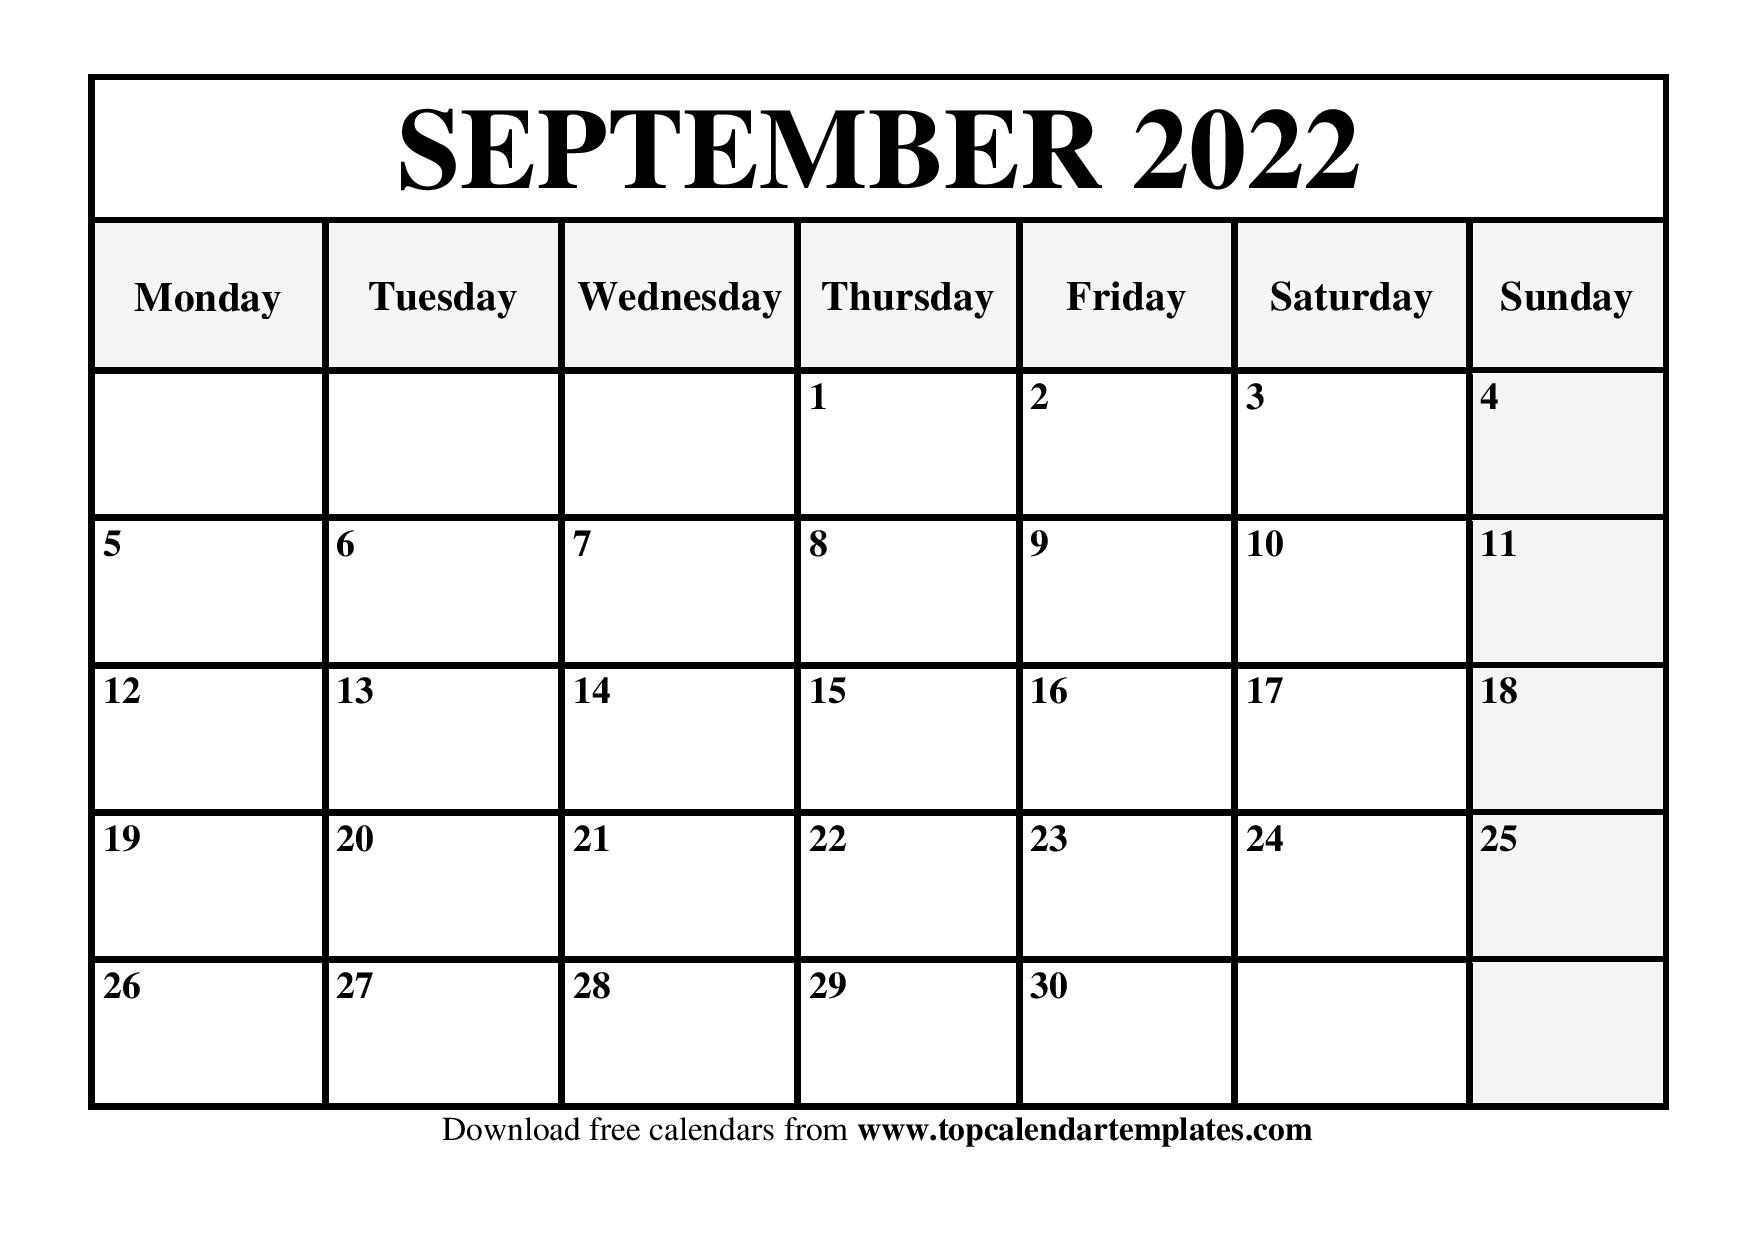 Free Printable Sept 2022 Calendar Printable Calendar September 2022 Templates - Pdf, Word, Excel